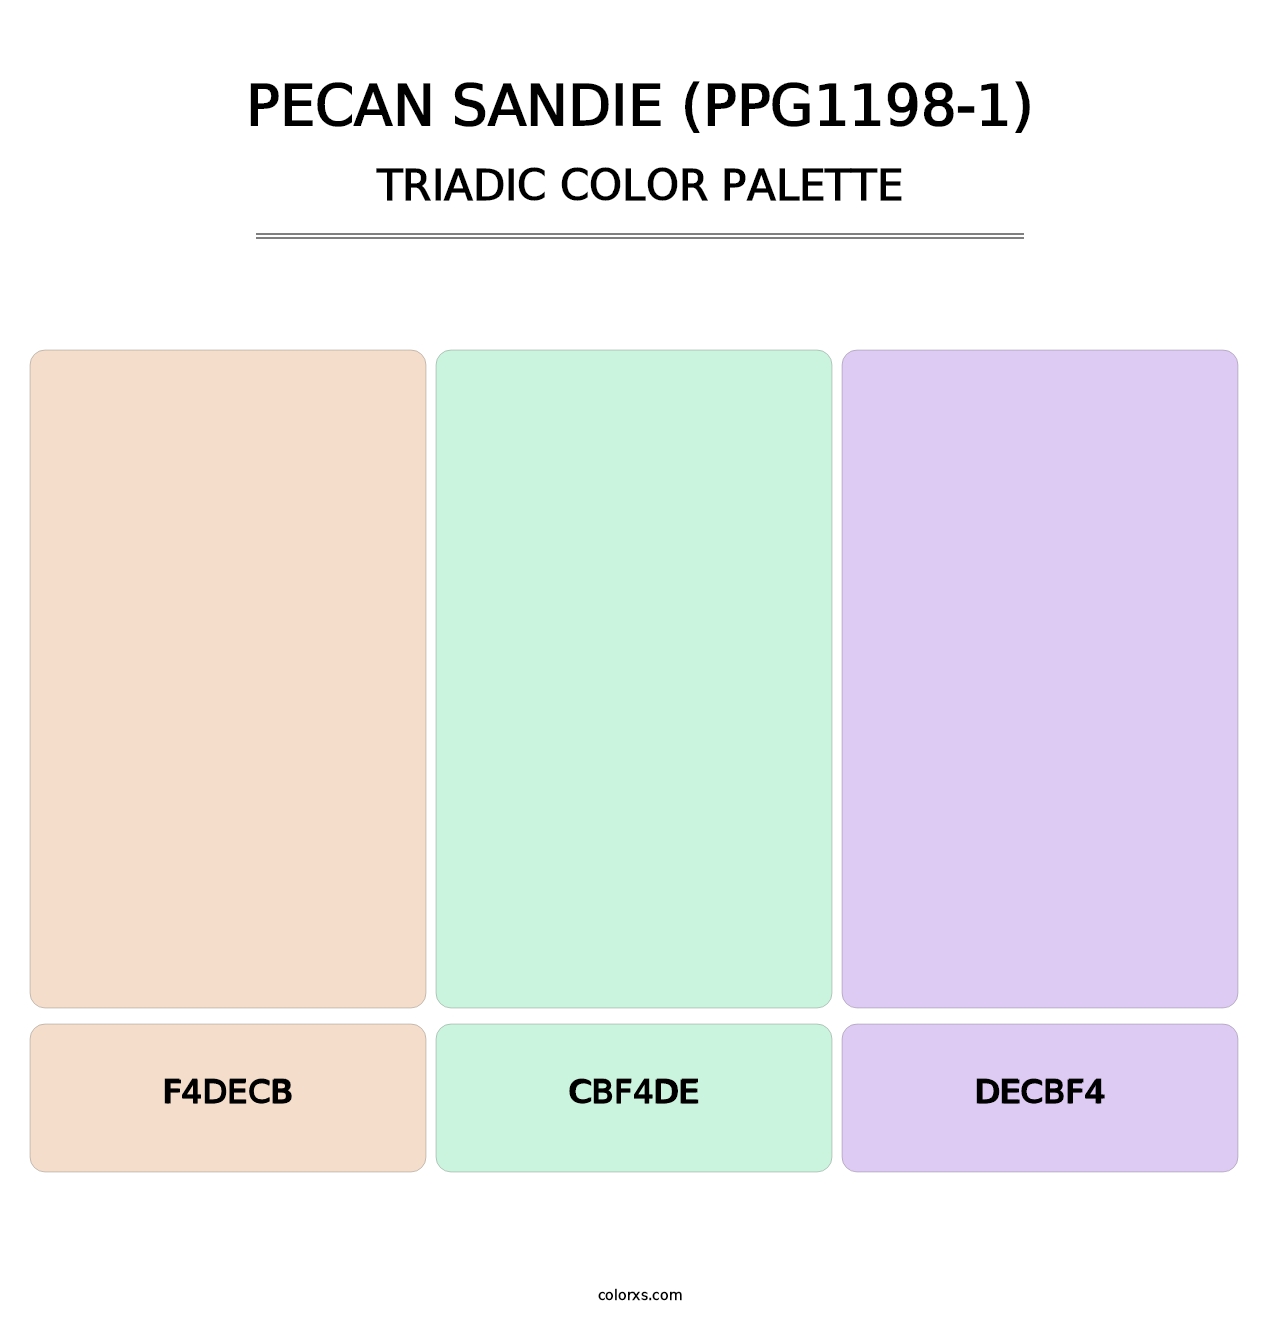 Pecan Sandie (PPG1198-1) - Triadic Color Palette